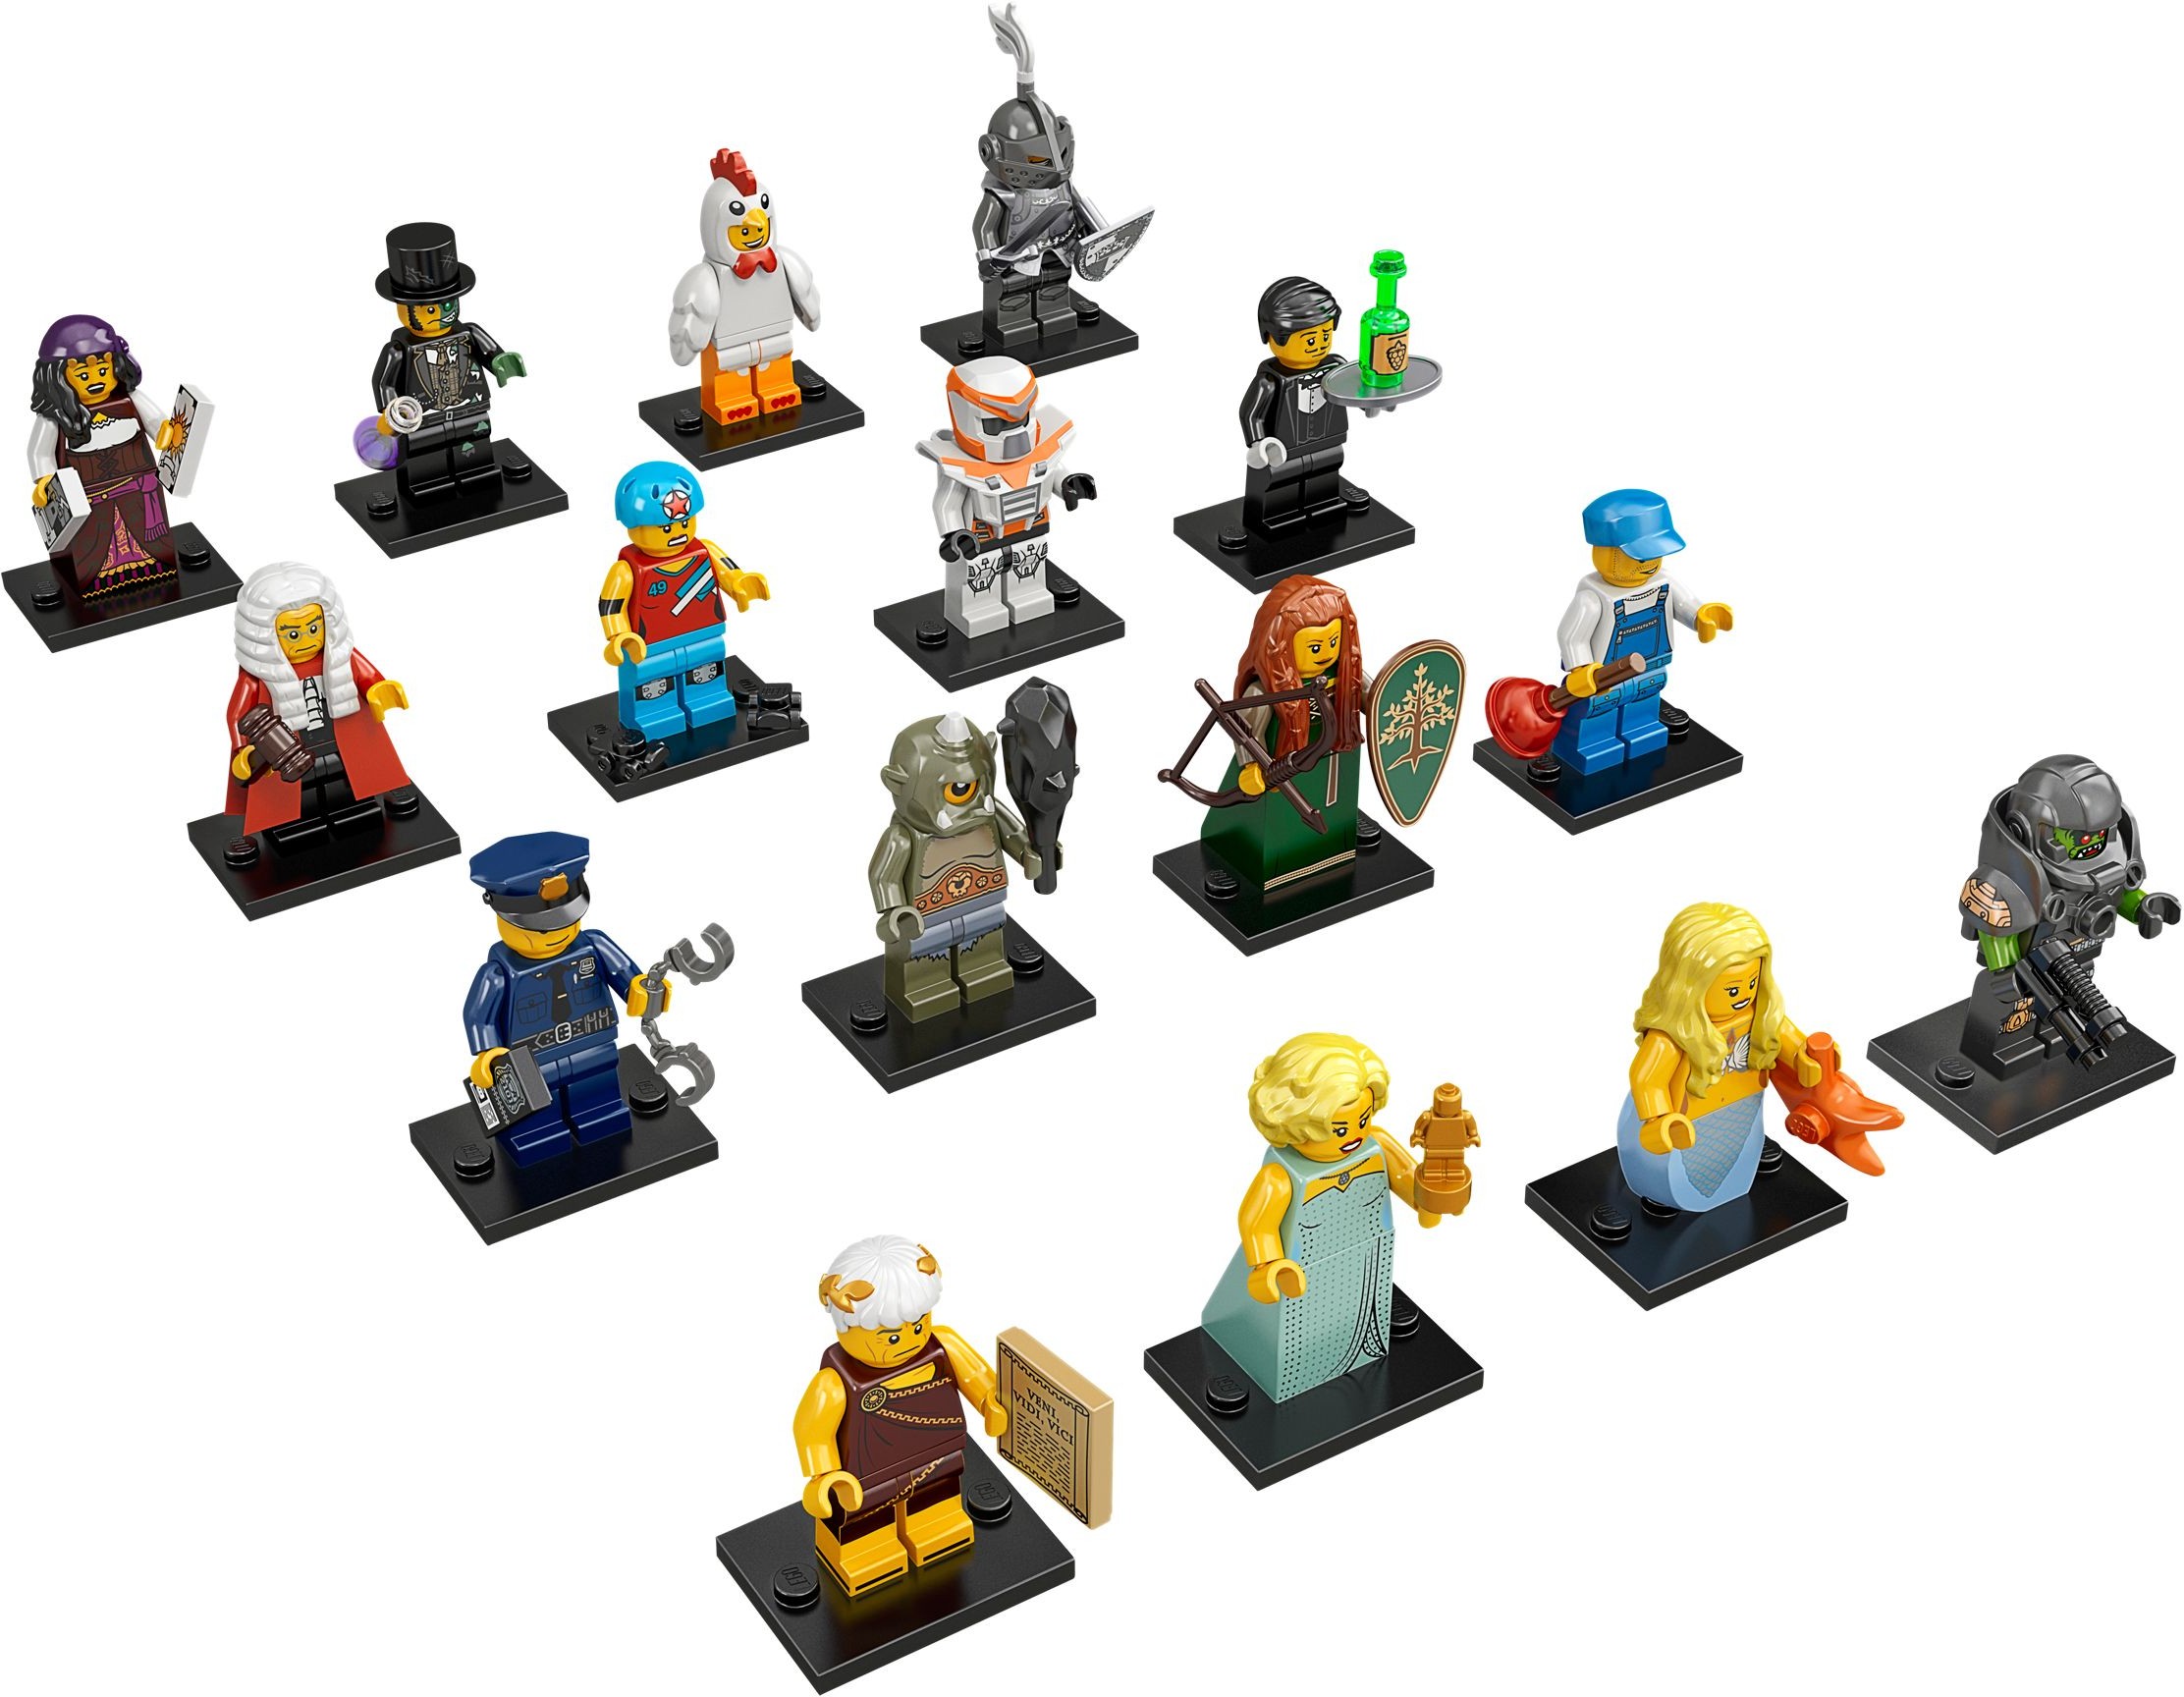 LEGO MINIFIGURES SERIES 9 71000 Judge